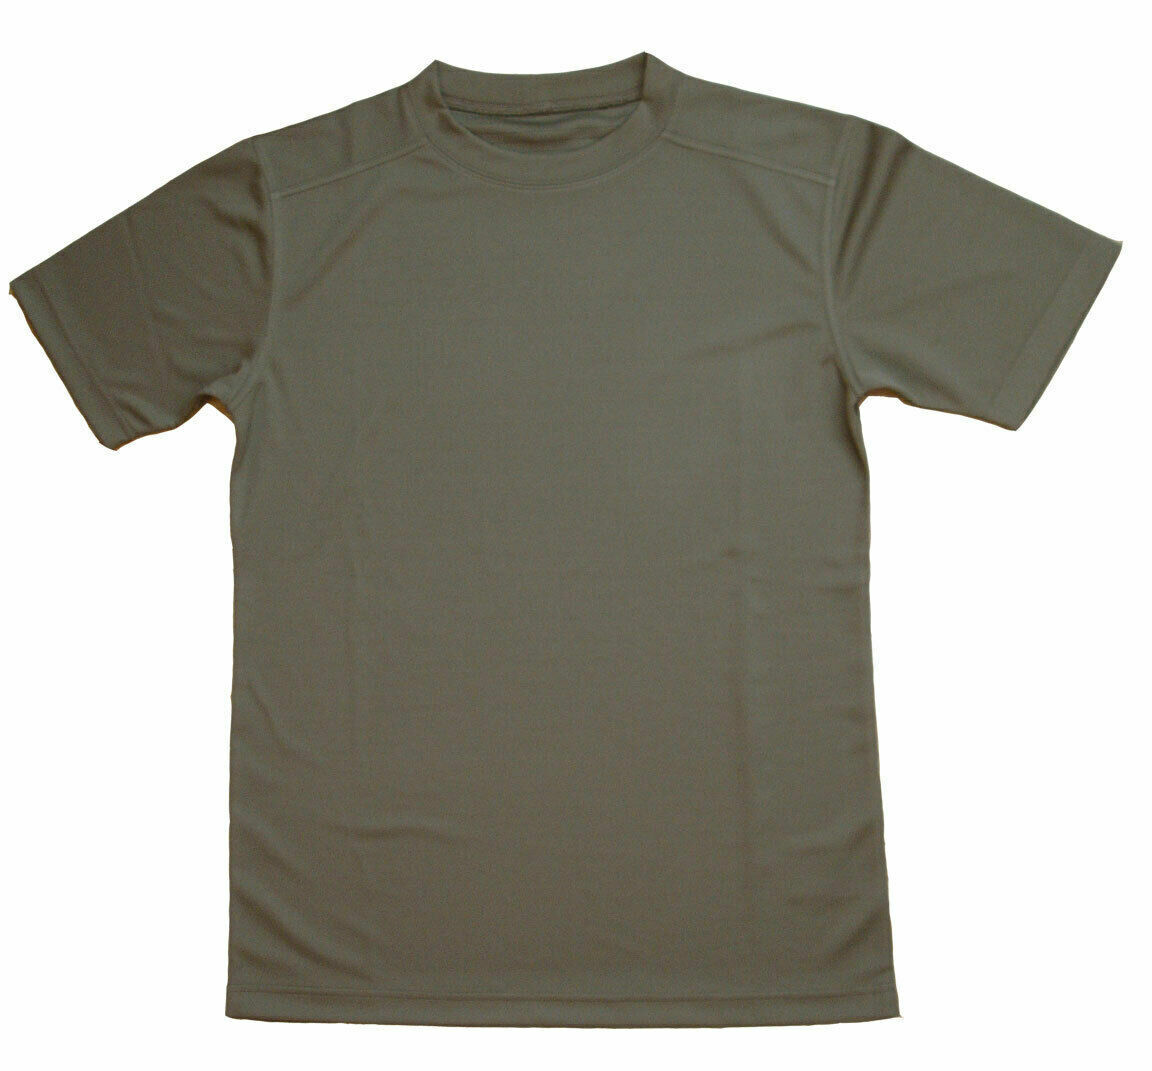 Current British Forces Issue Light Olive Coolmax T-Shirt MTP PCS - Various sizes